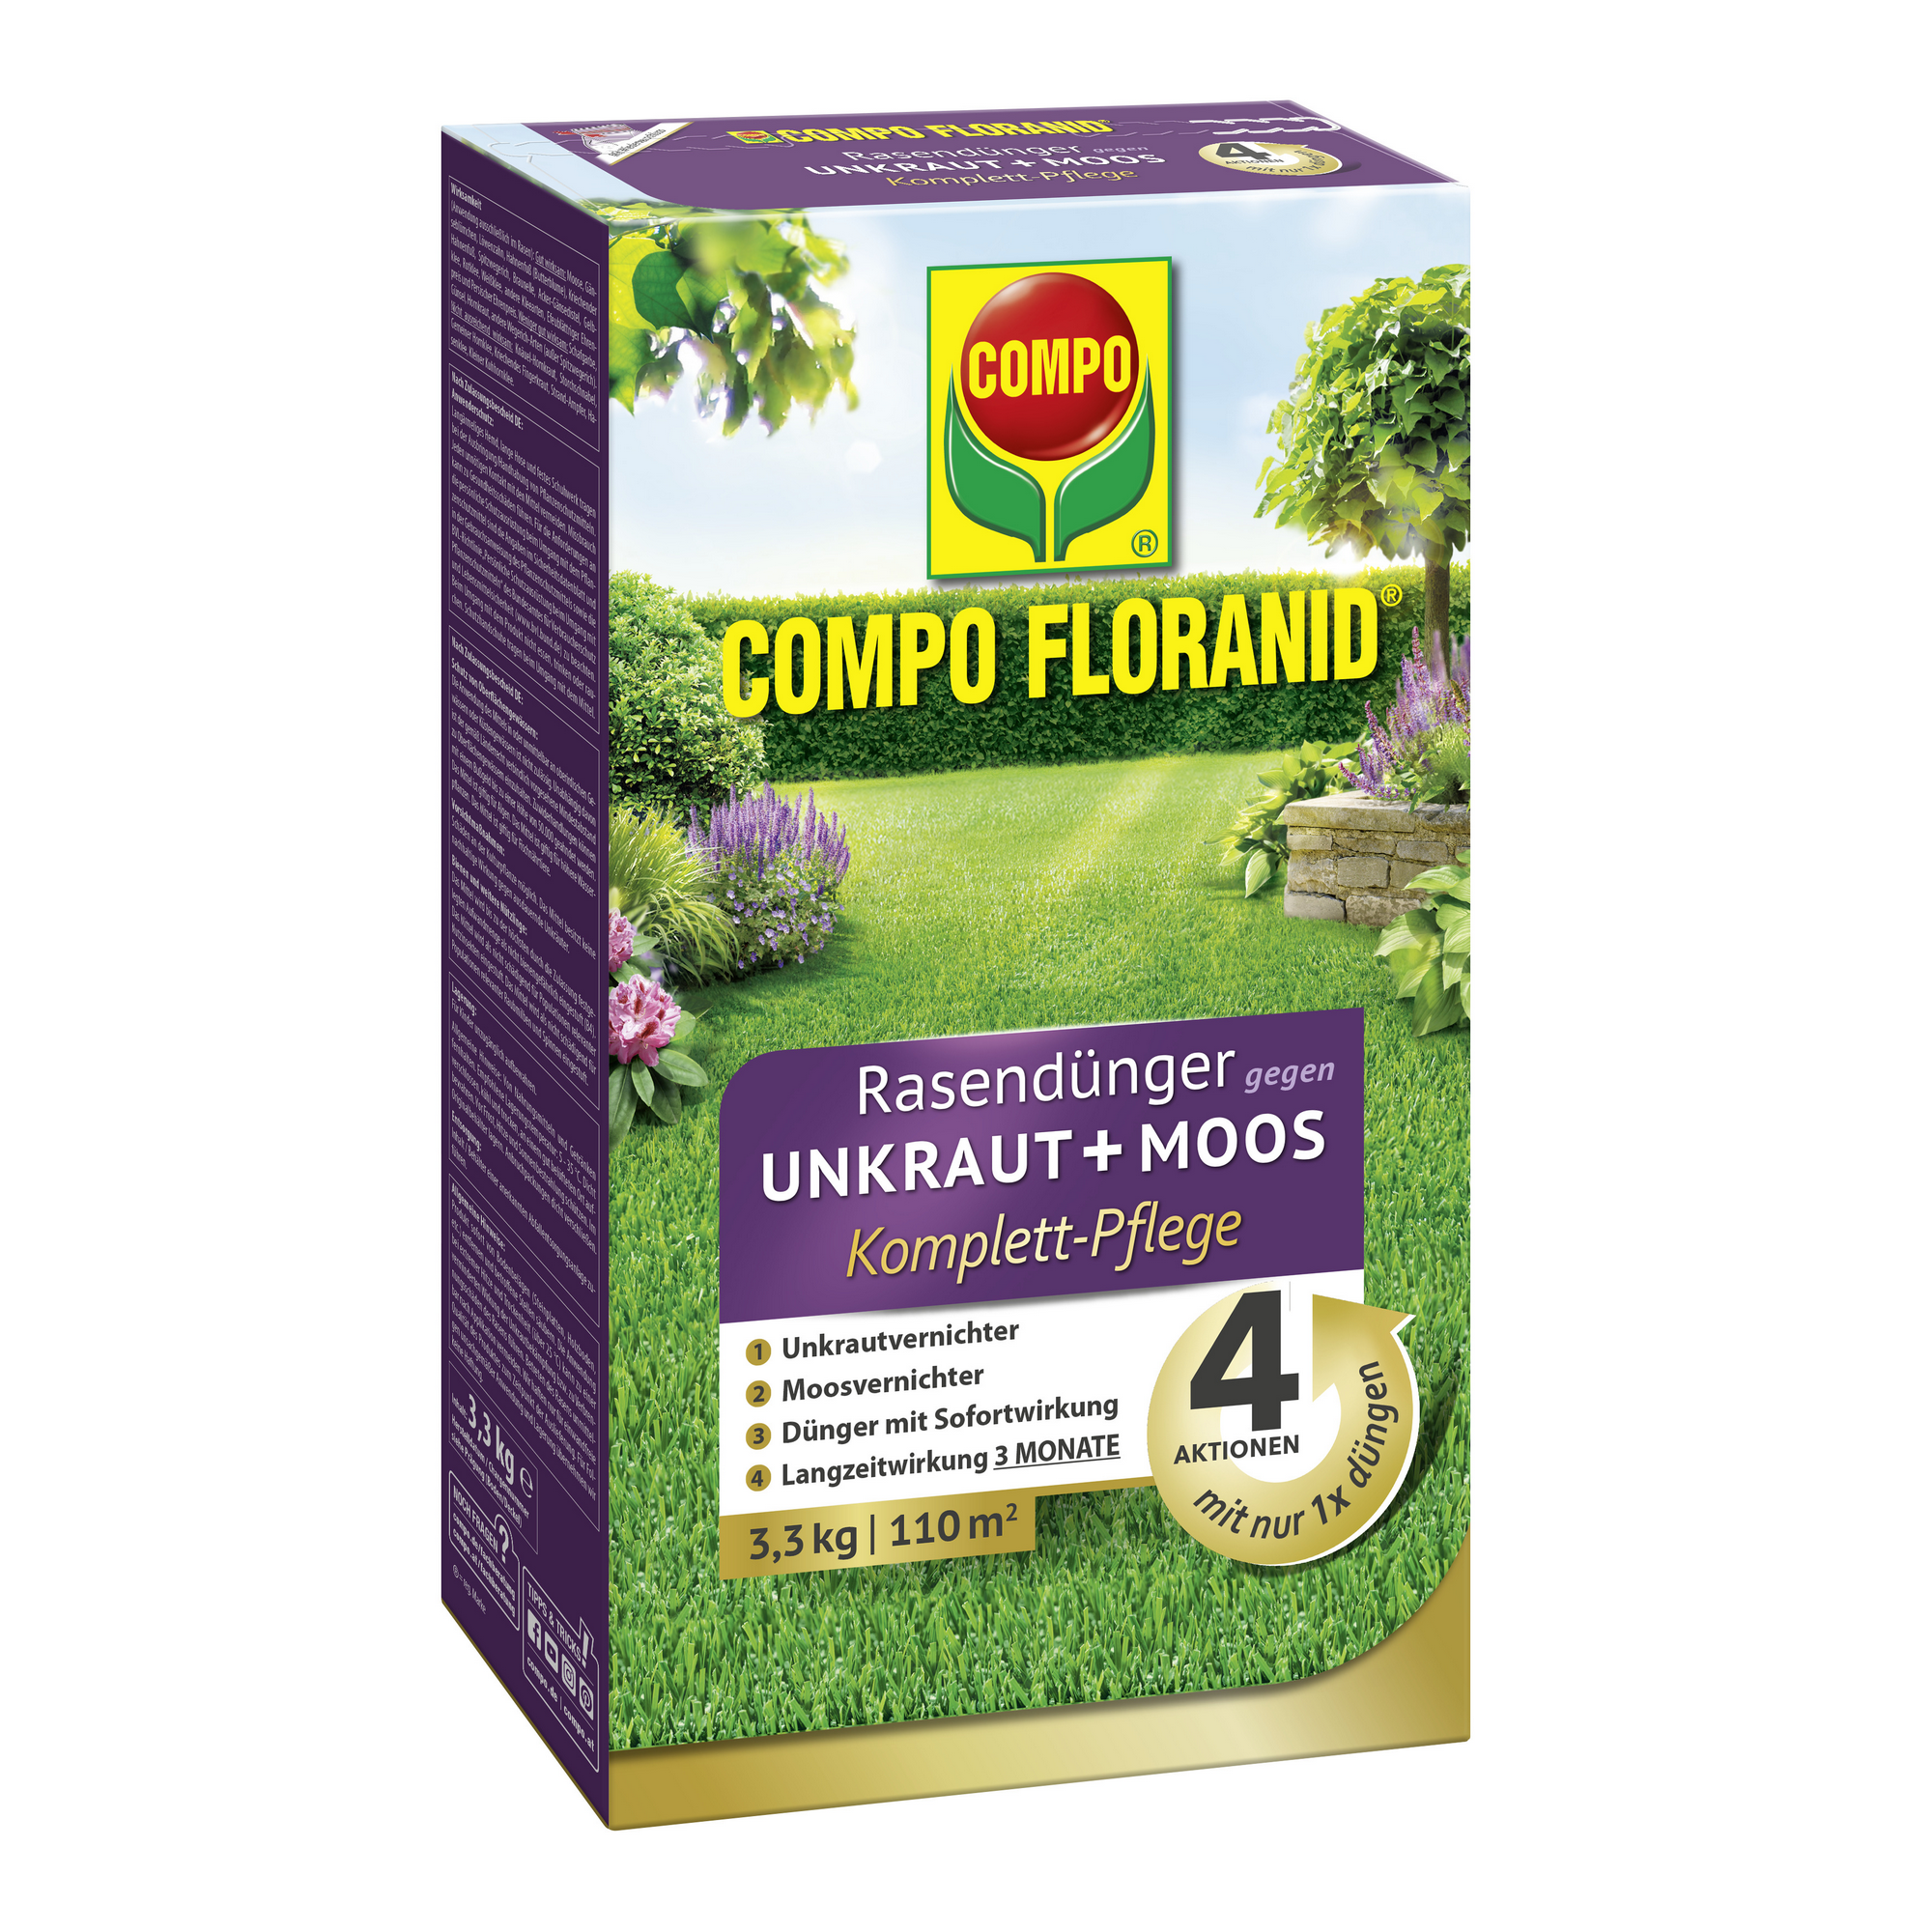 Rasendünger gegen Unkraut + Moos 3,3 kg + product picture